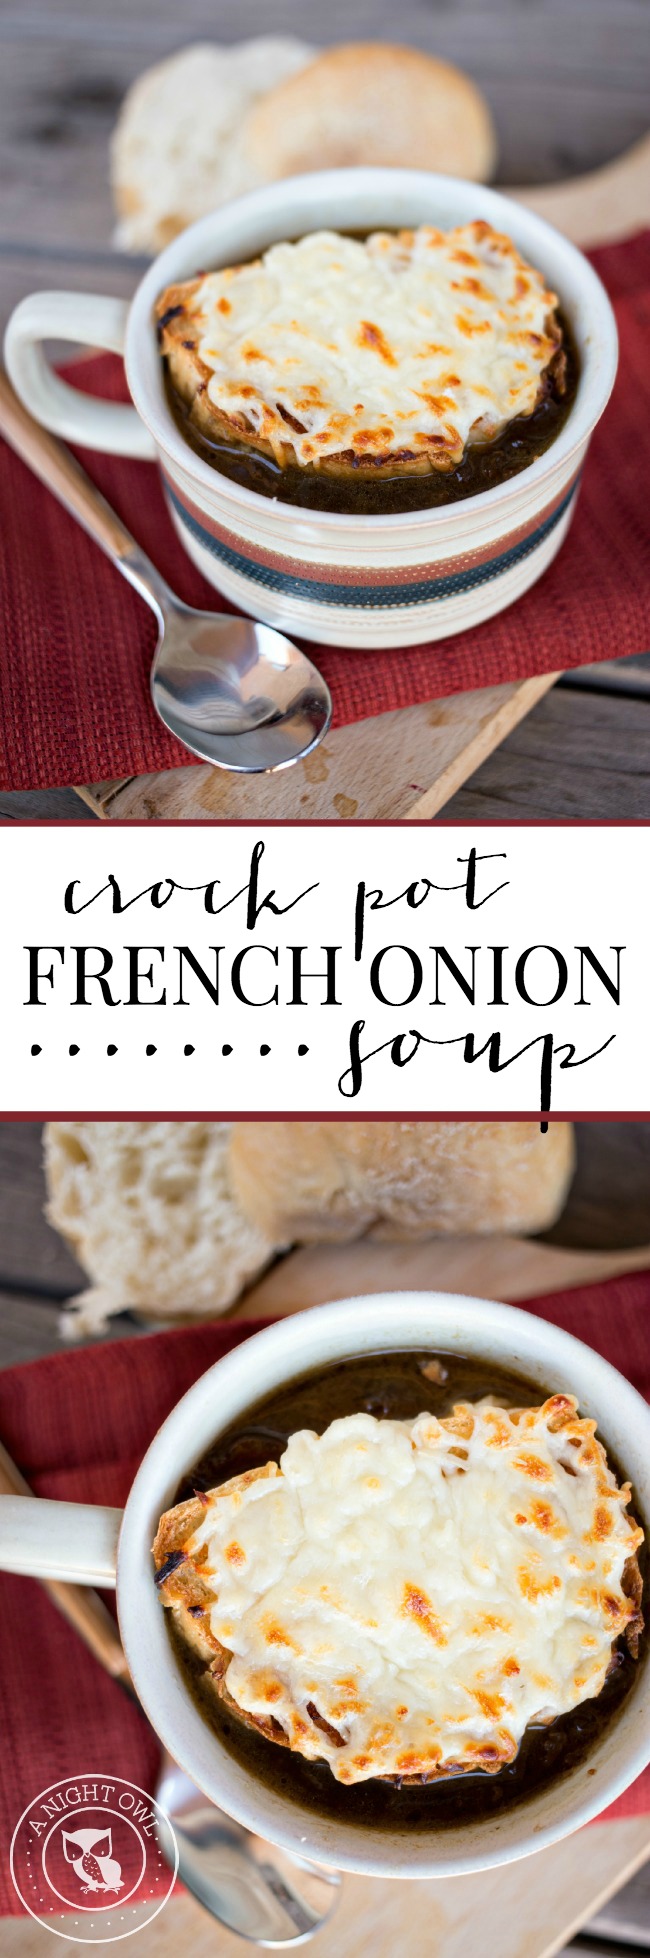 Crock Pot French Onion Soup | anightowlblog.com